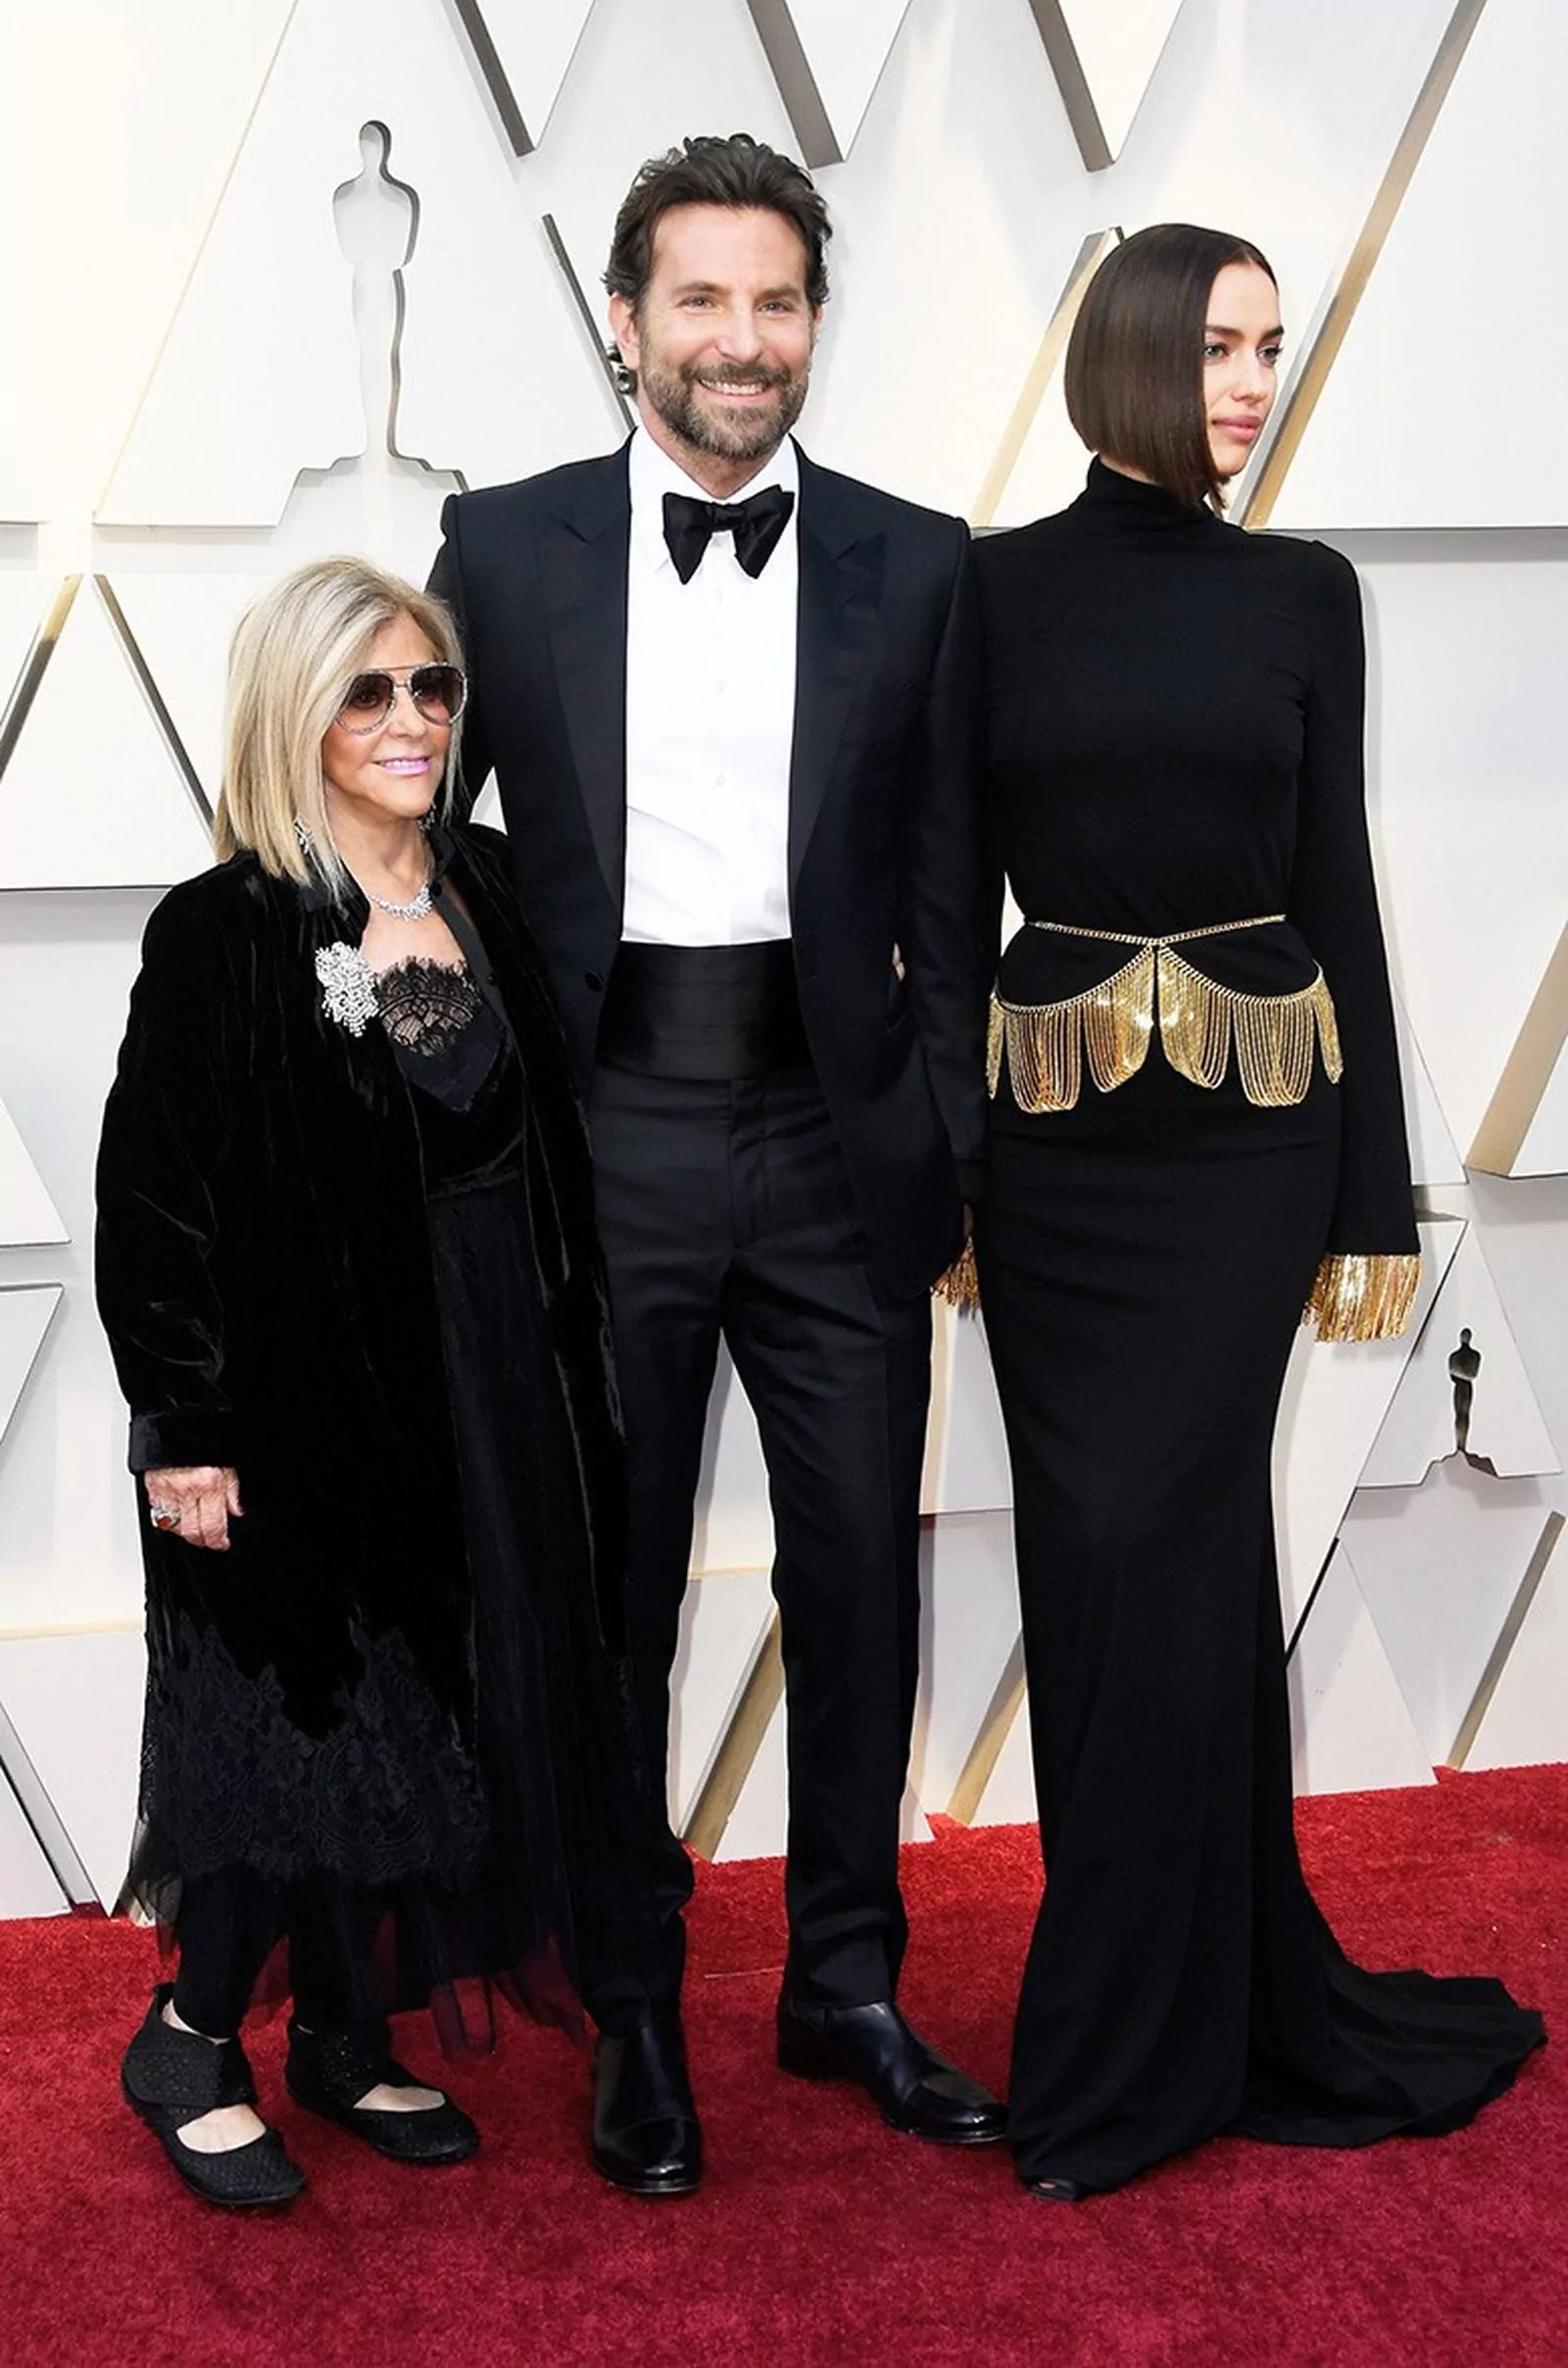 Глория Кампано, Брэдли Купер, Ирина Шейк на церемонии вручения наград премии Оскар-2019, 25 февраля 2019 г.